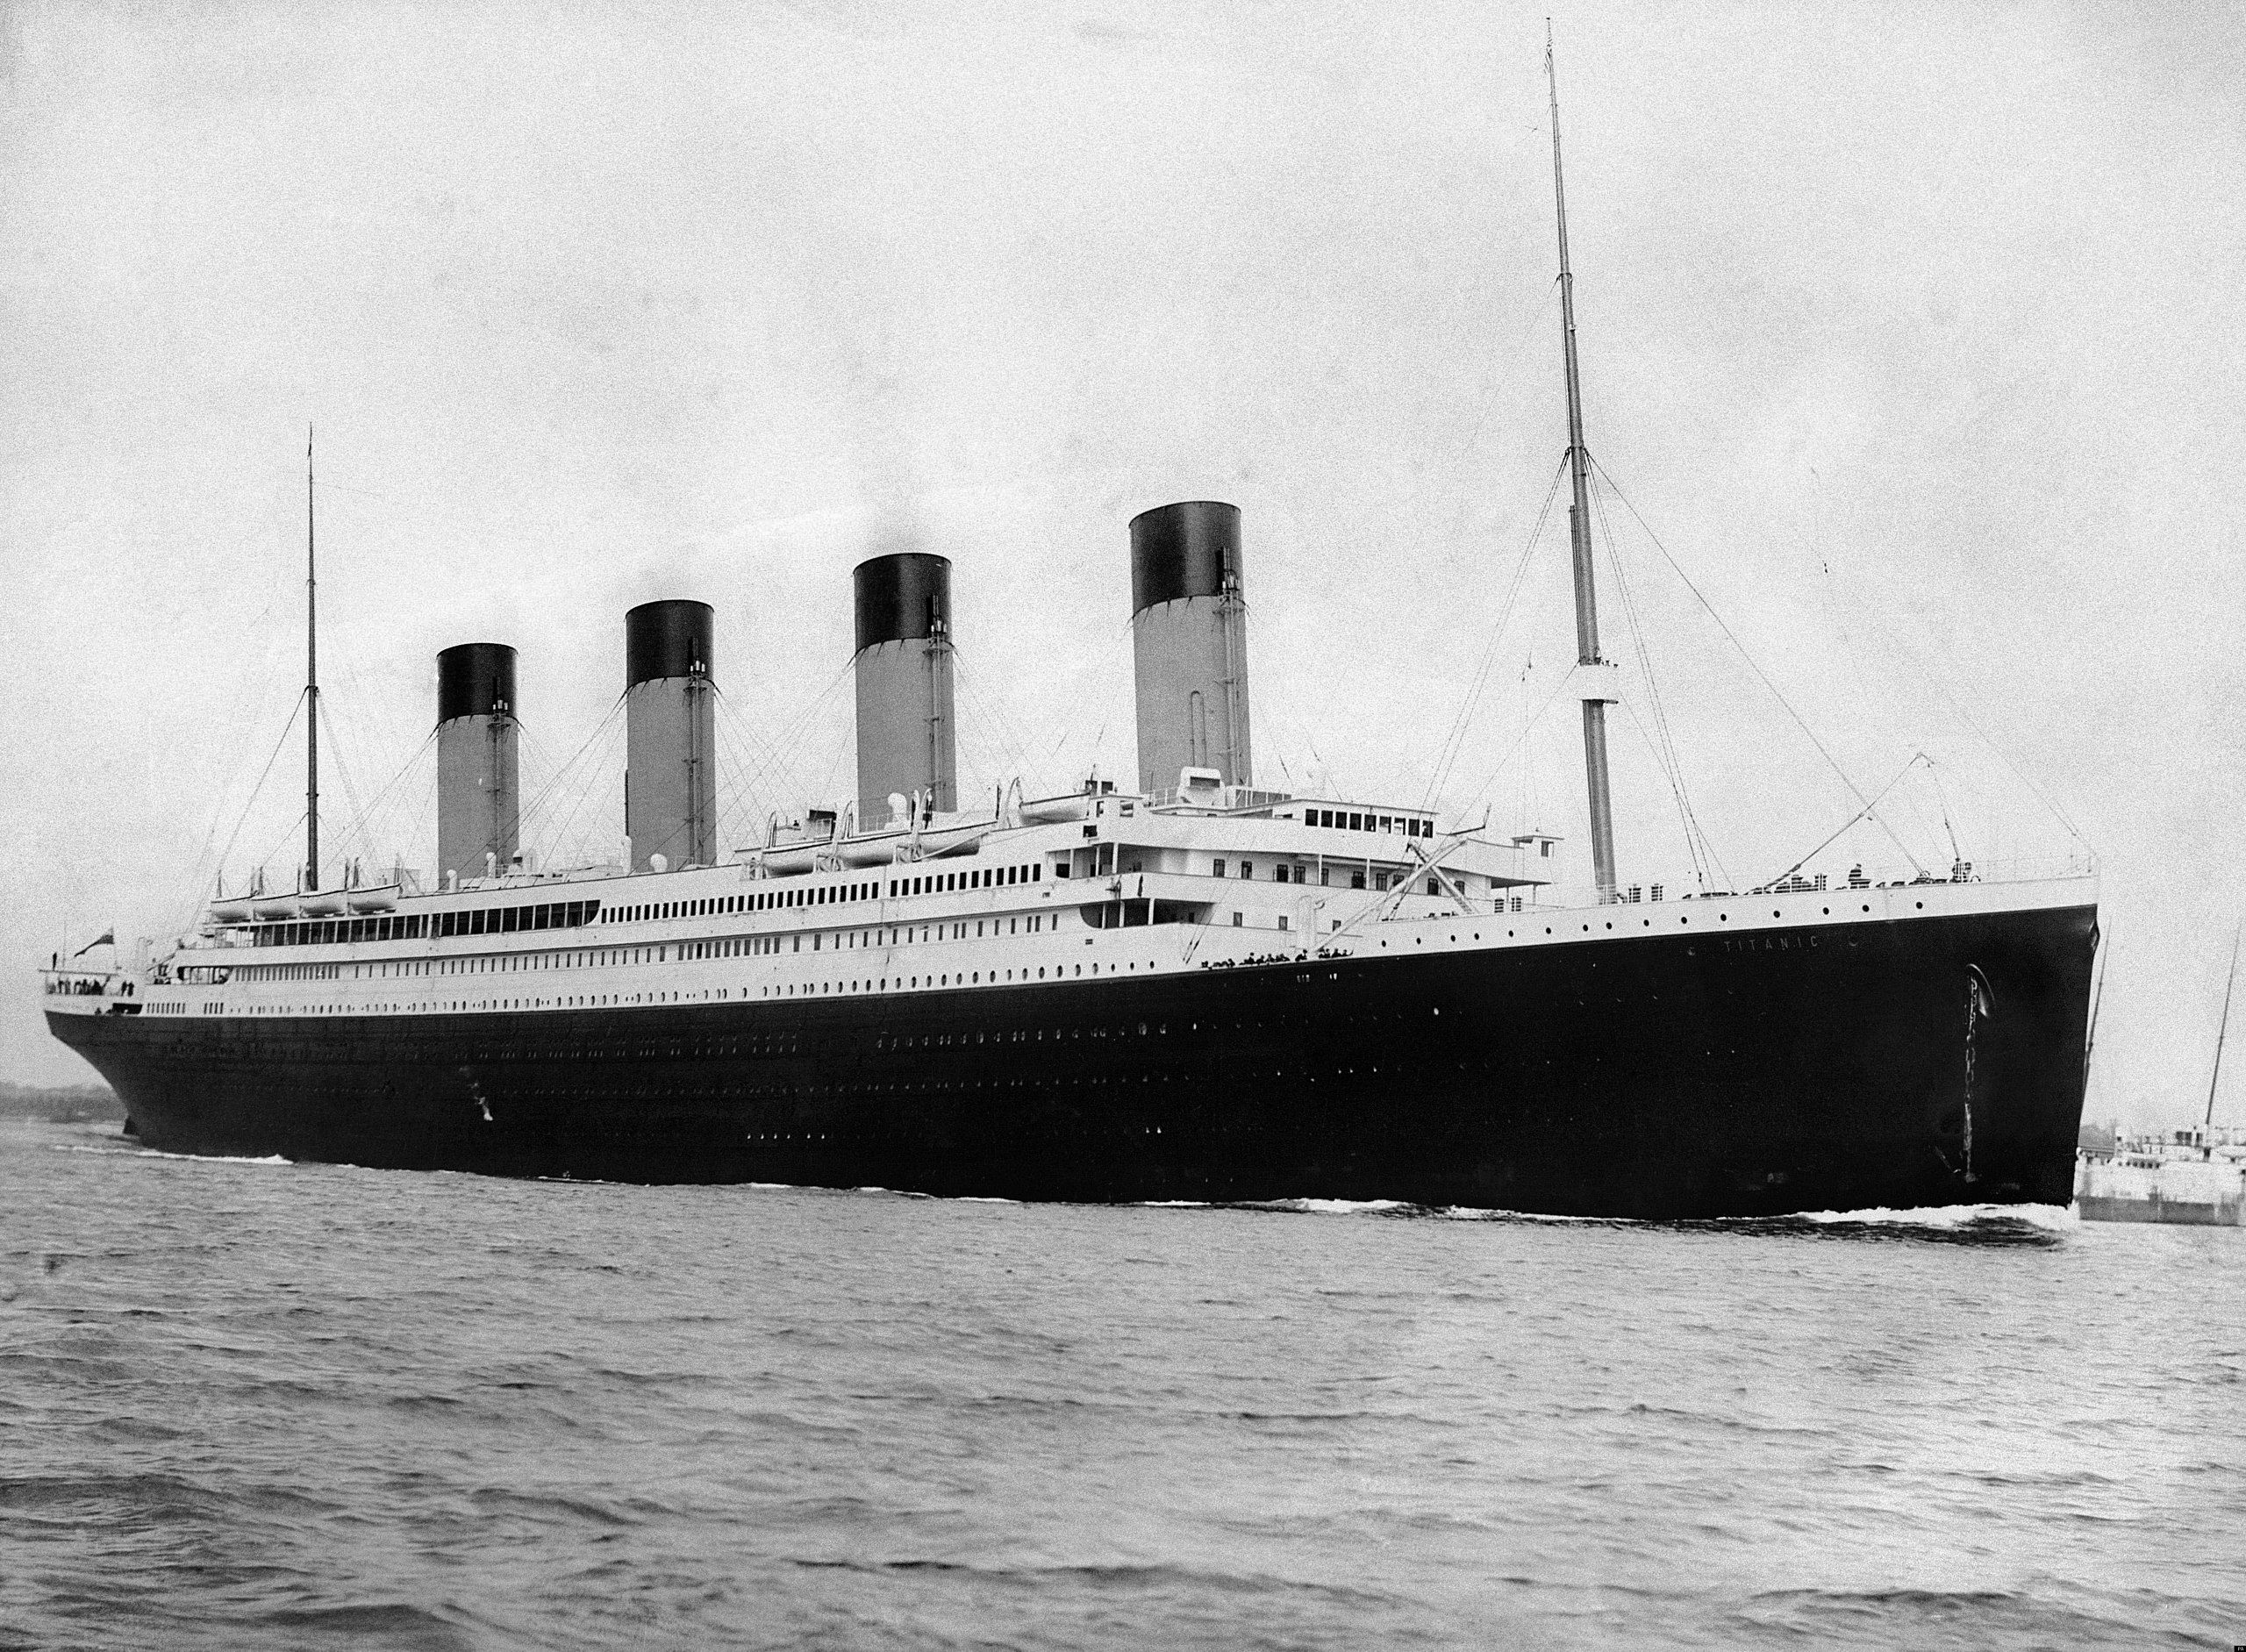 Australian billionaire to build a replica of the RMS Titanic